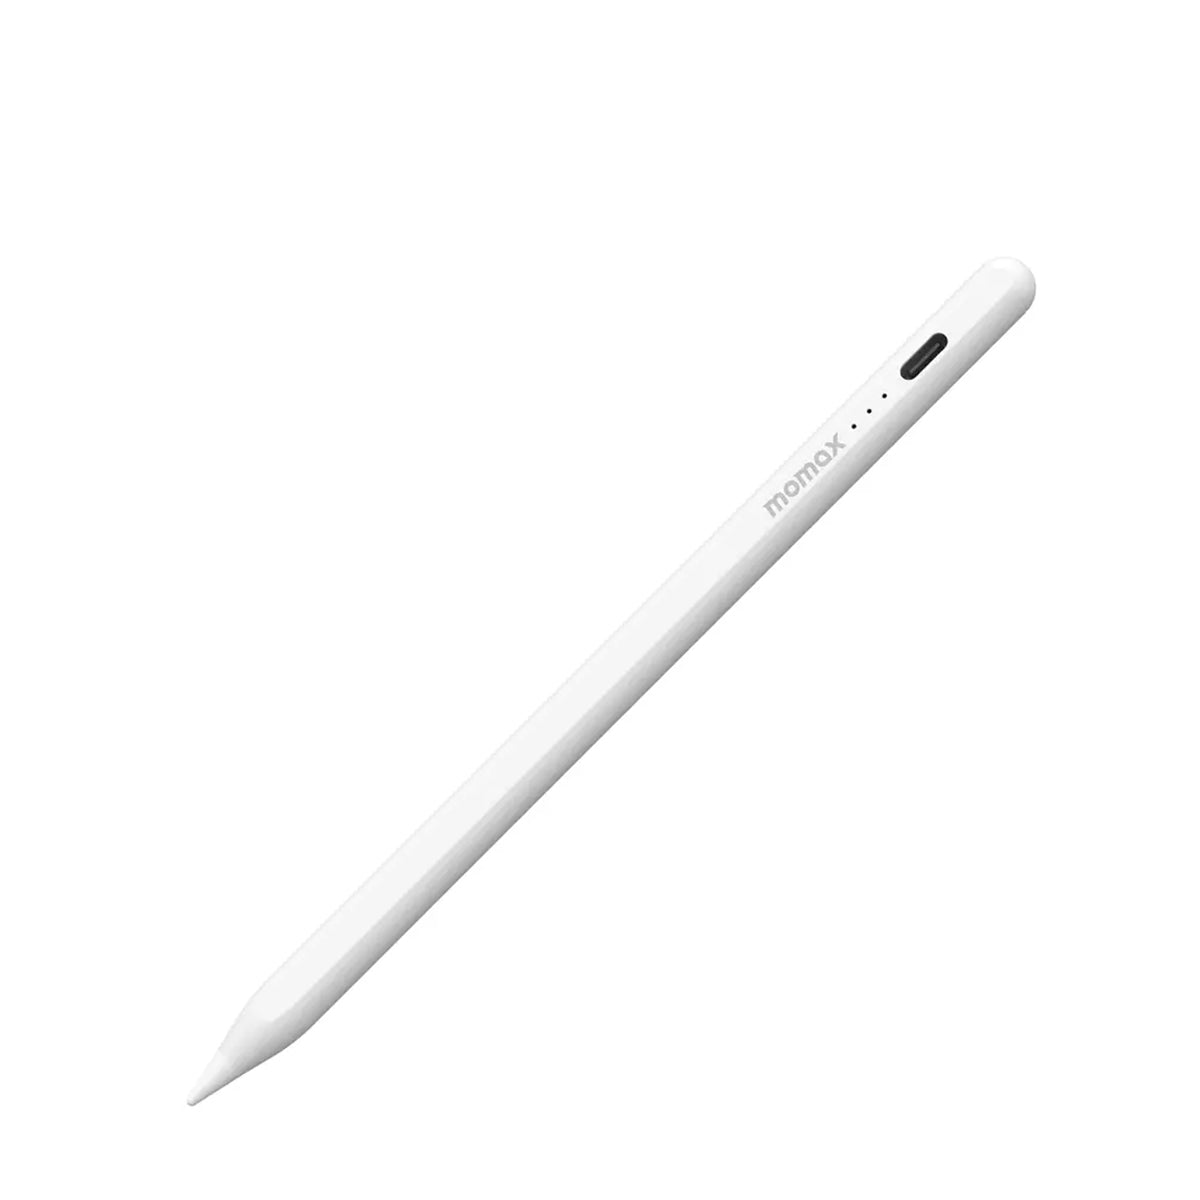 Momax Onelink Active Stylus Pen 4.0 For iPad  - White